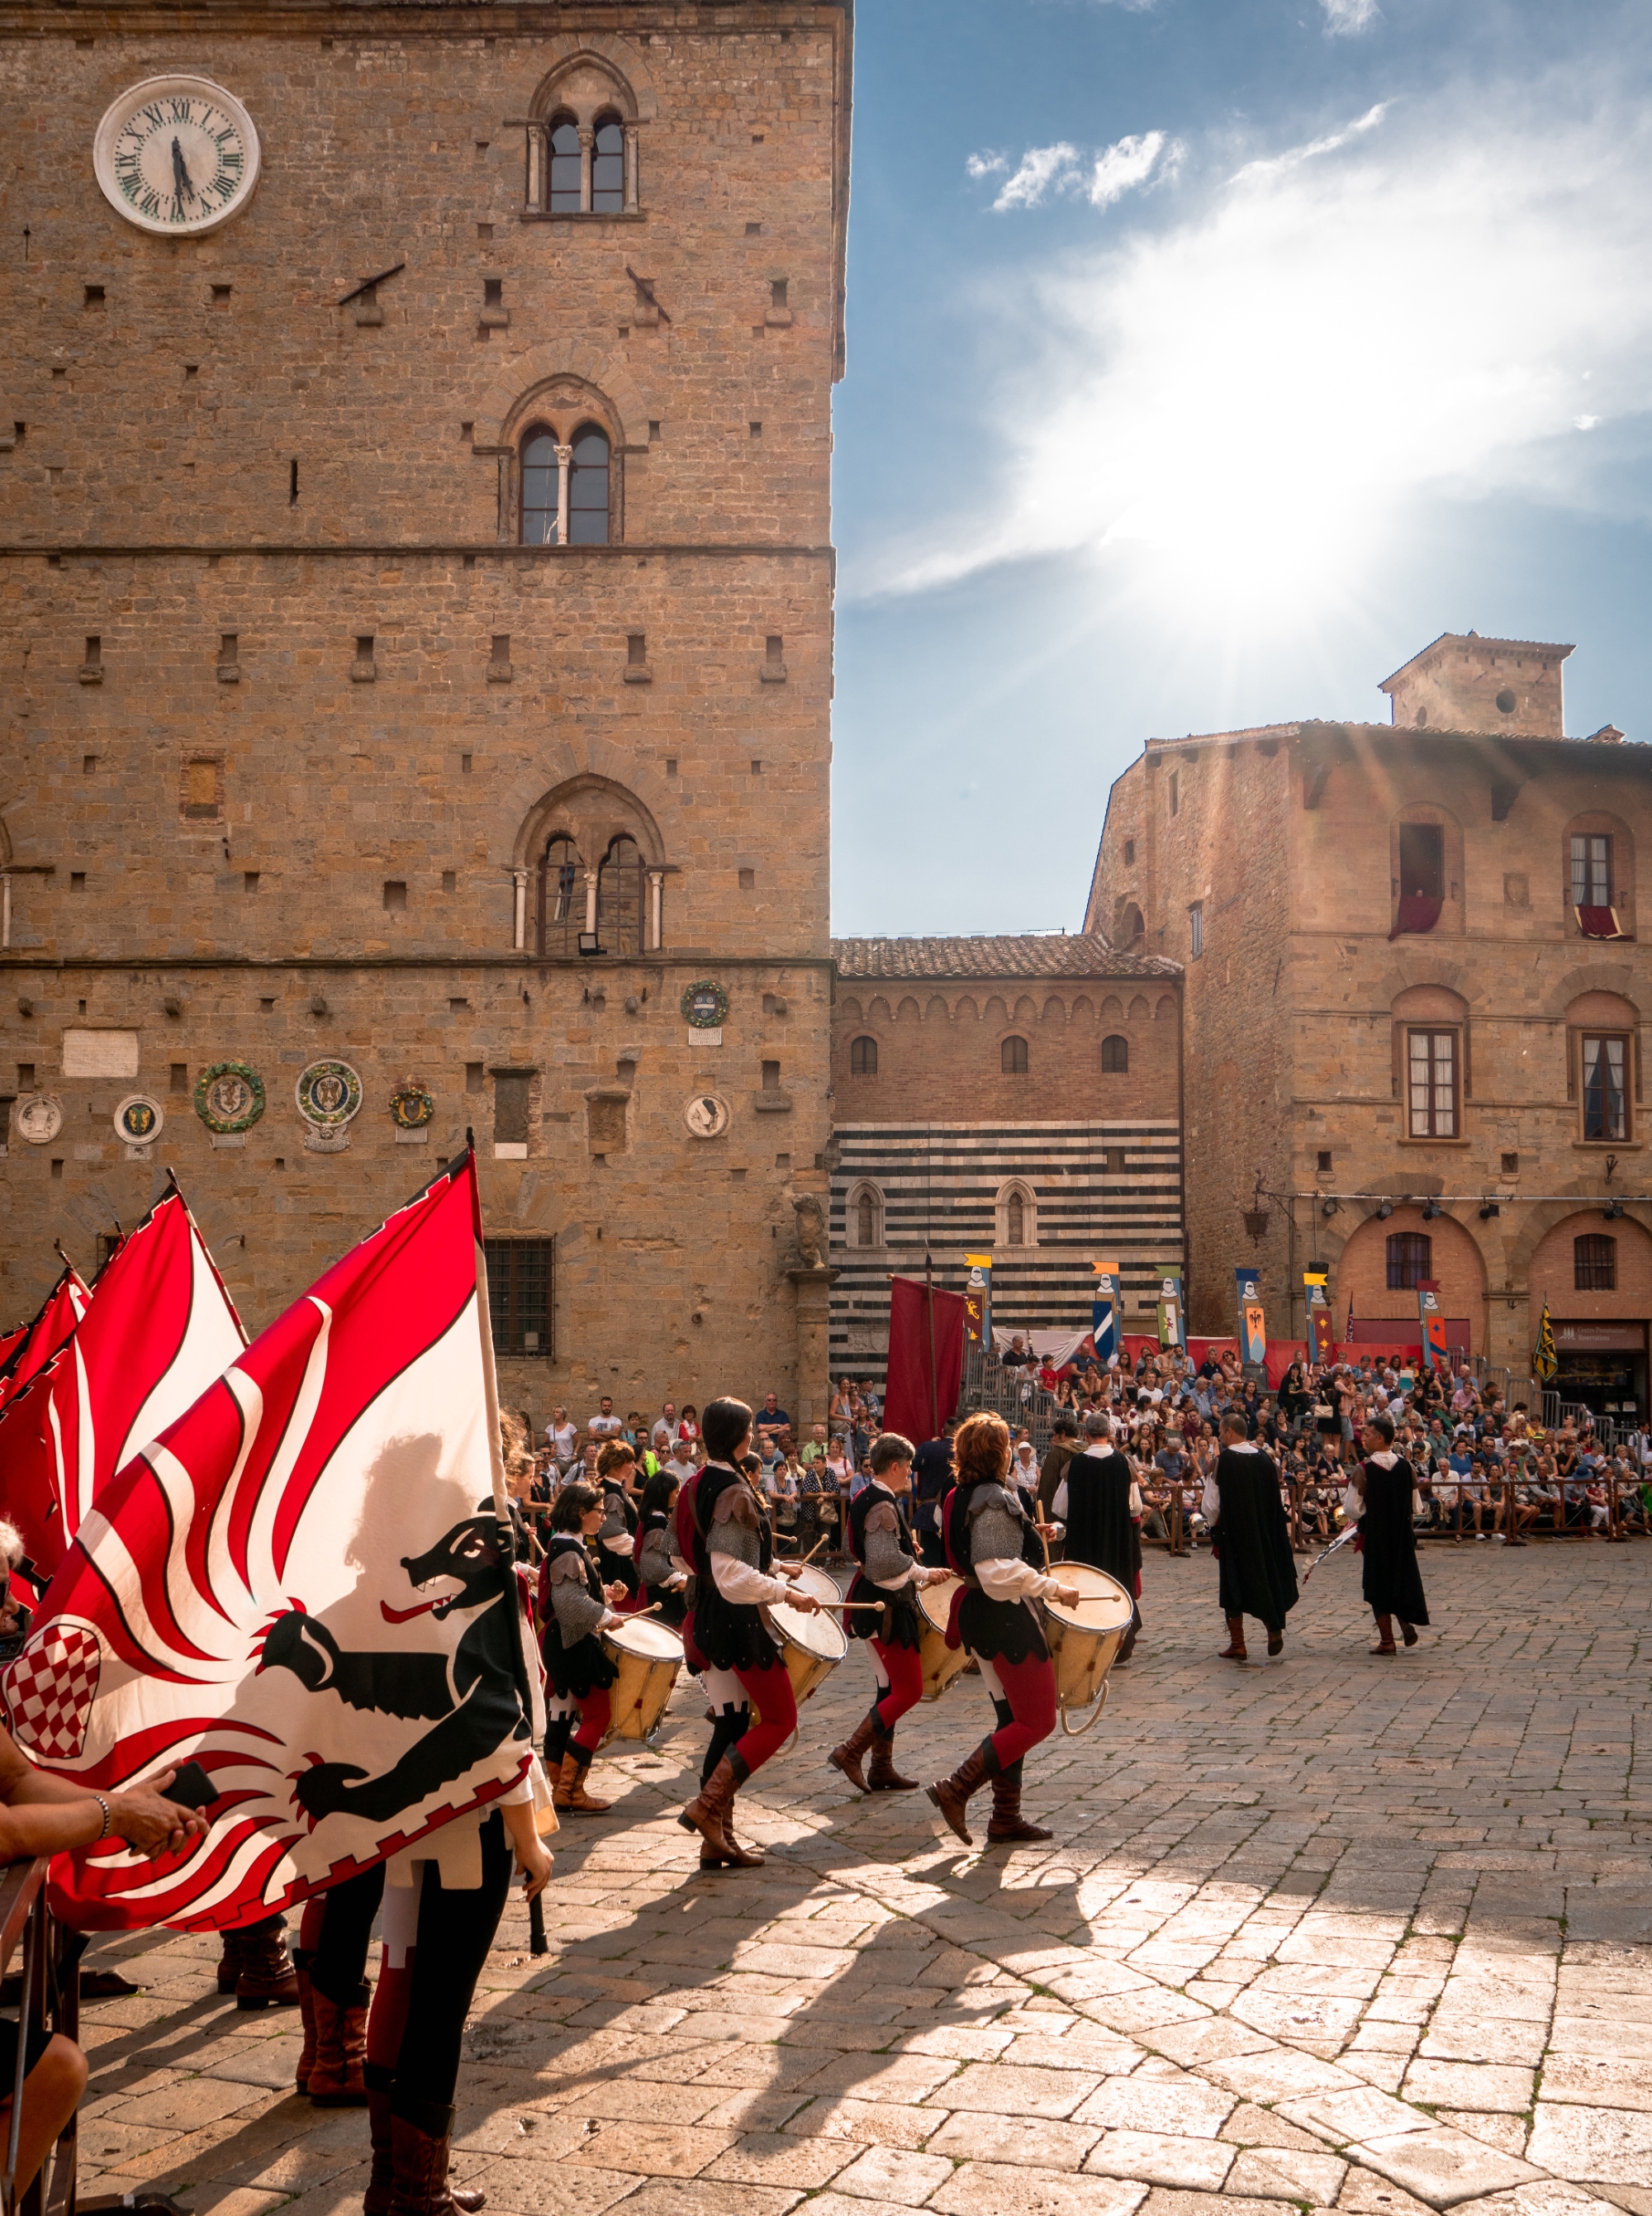 Volterra medieval festival in August